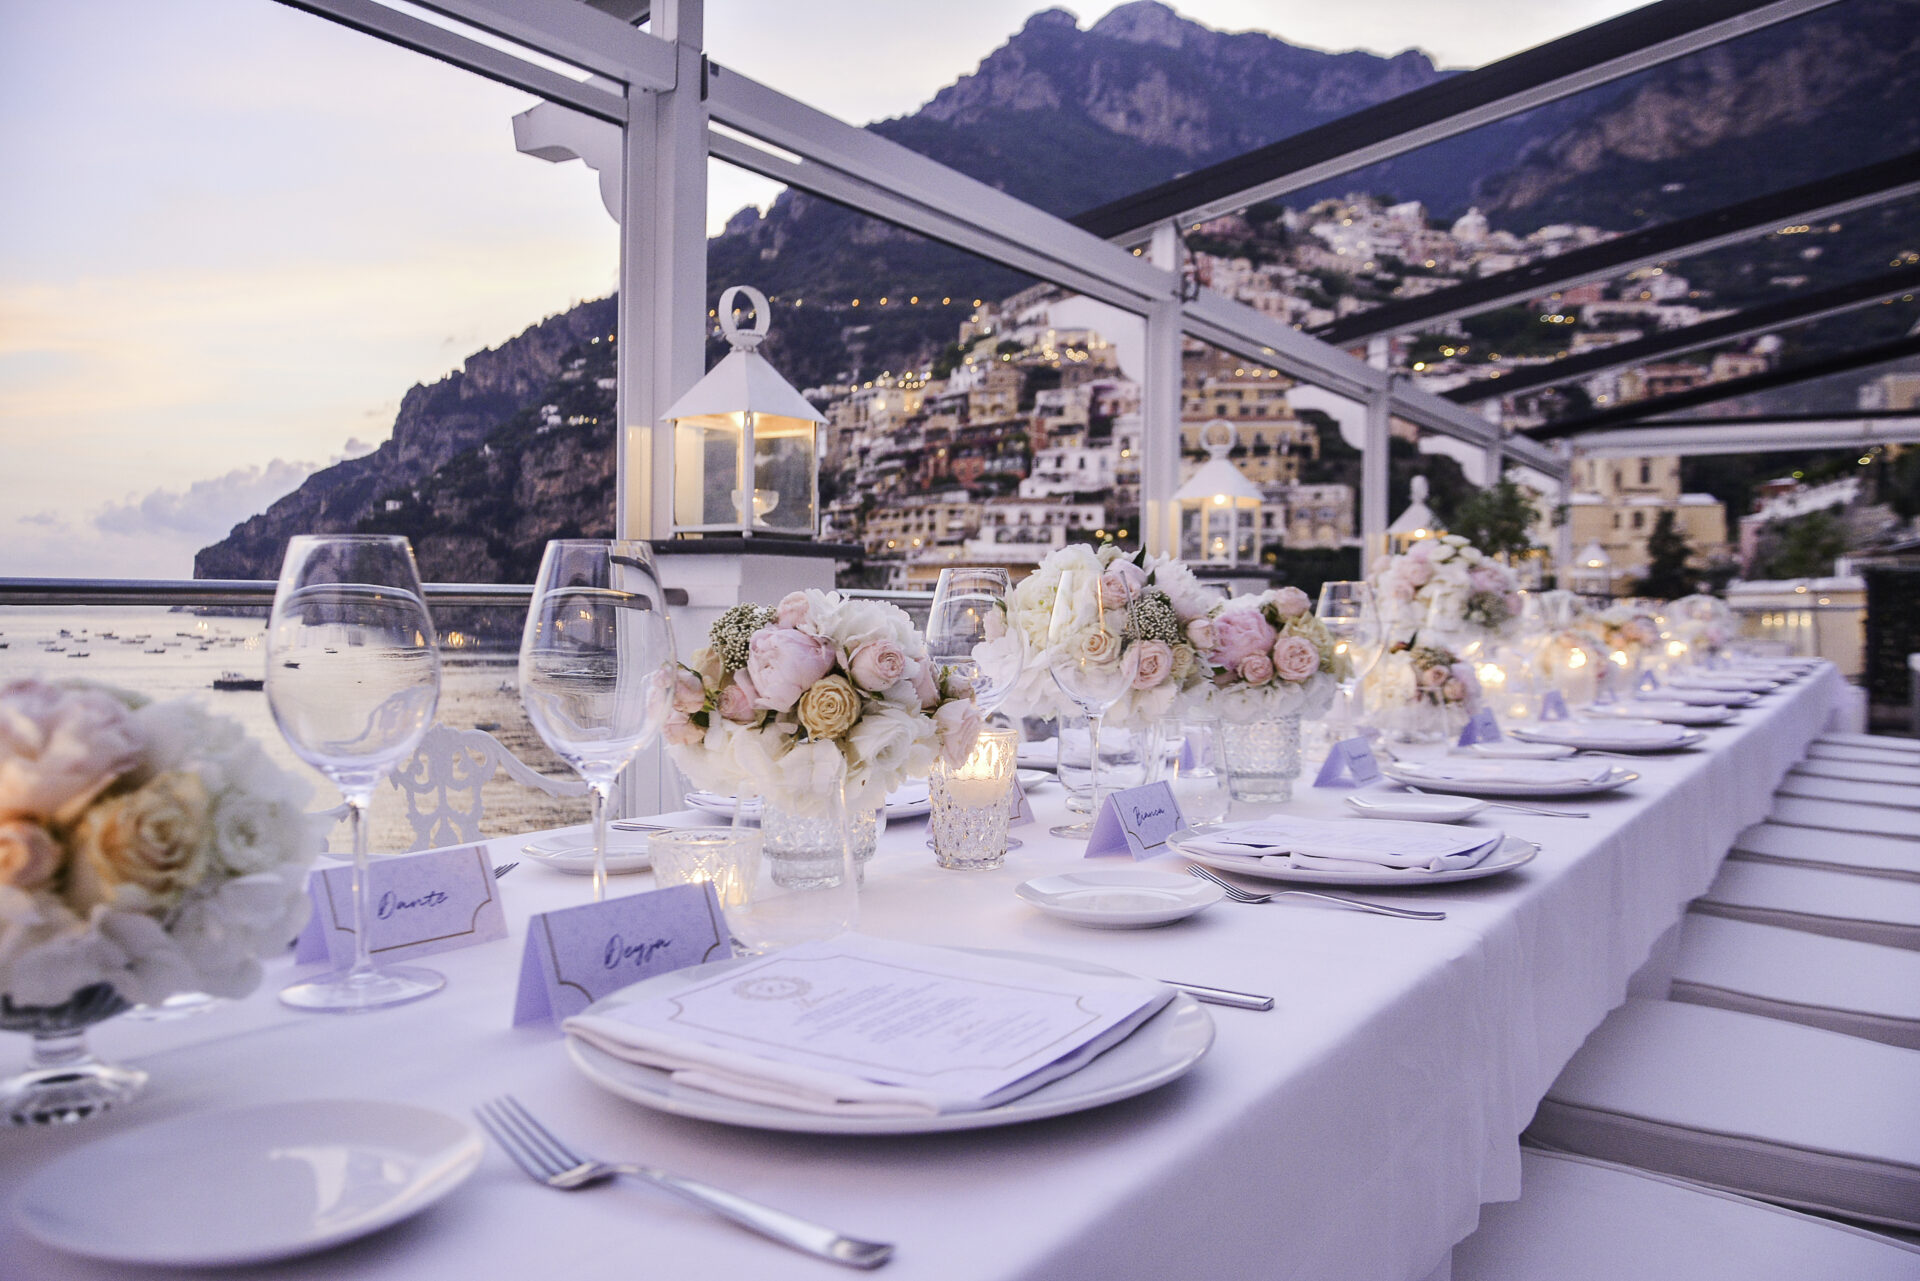 Restaurant Weddings  Best Spots for a Restaurant Wedding Dinner